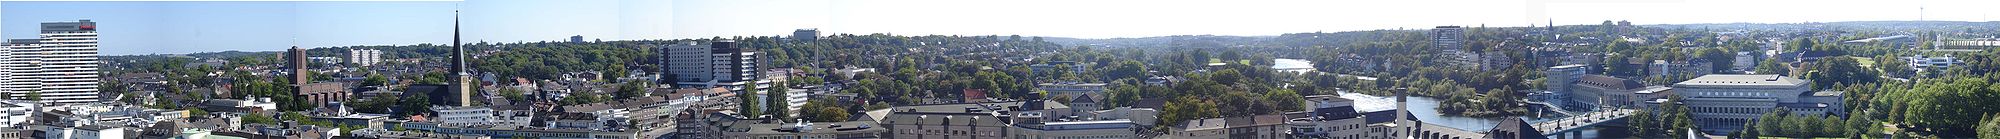 Panorama Mülheim an der Ruhr – Blick nach Süden